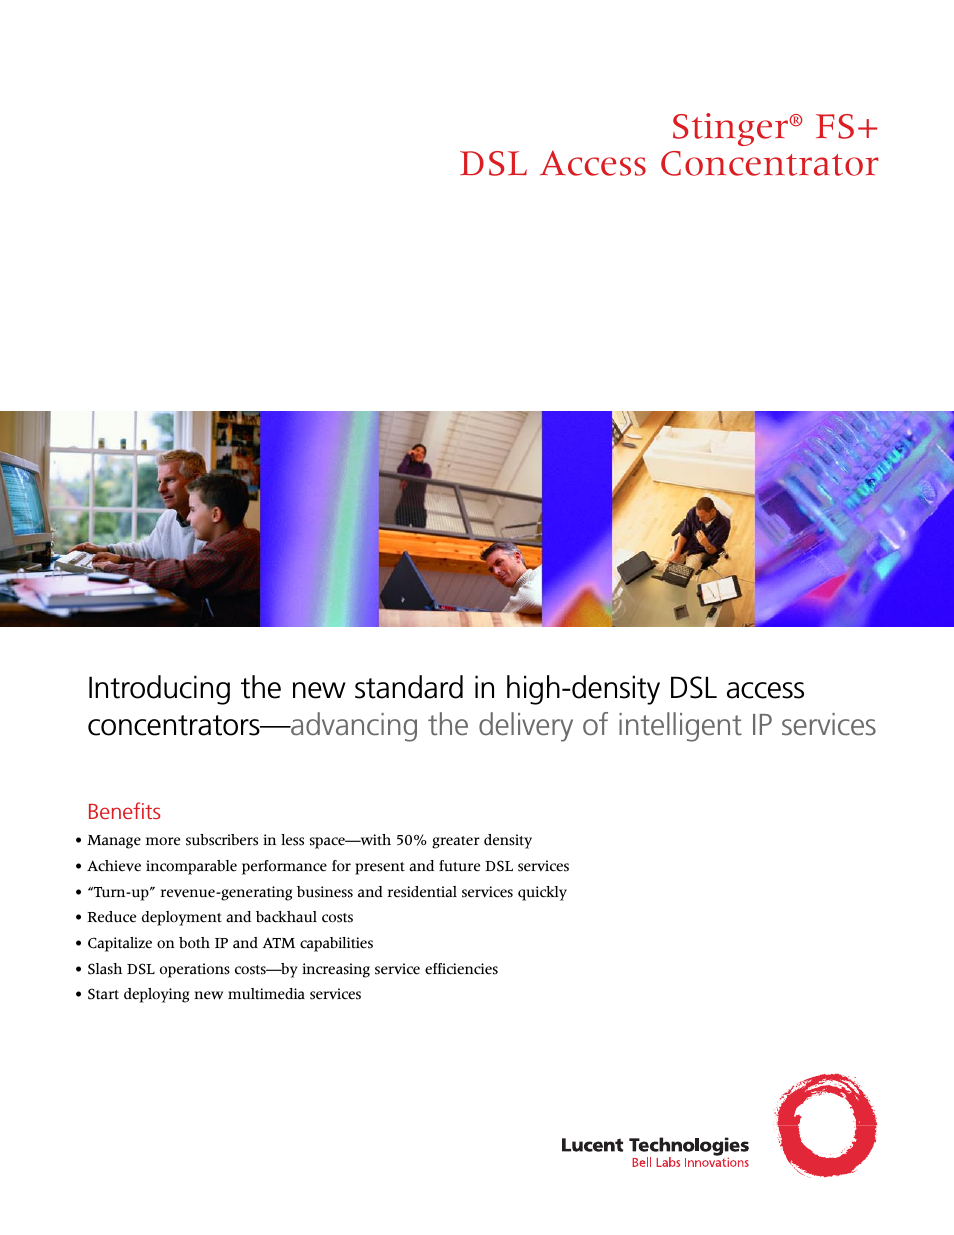 DSL Access Concentrator Stinger FS+